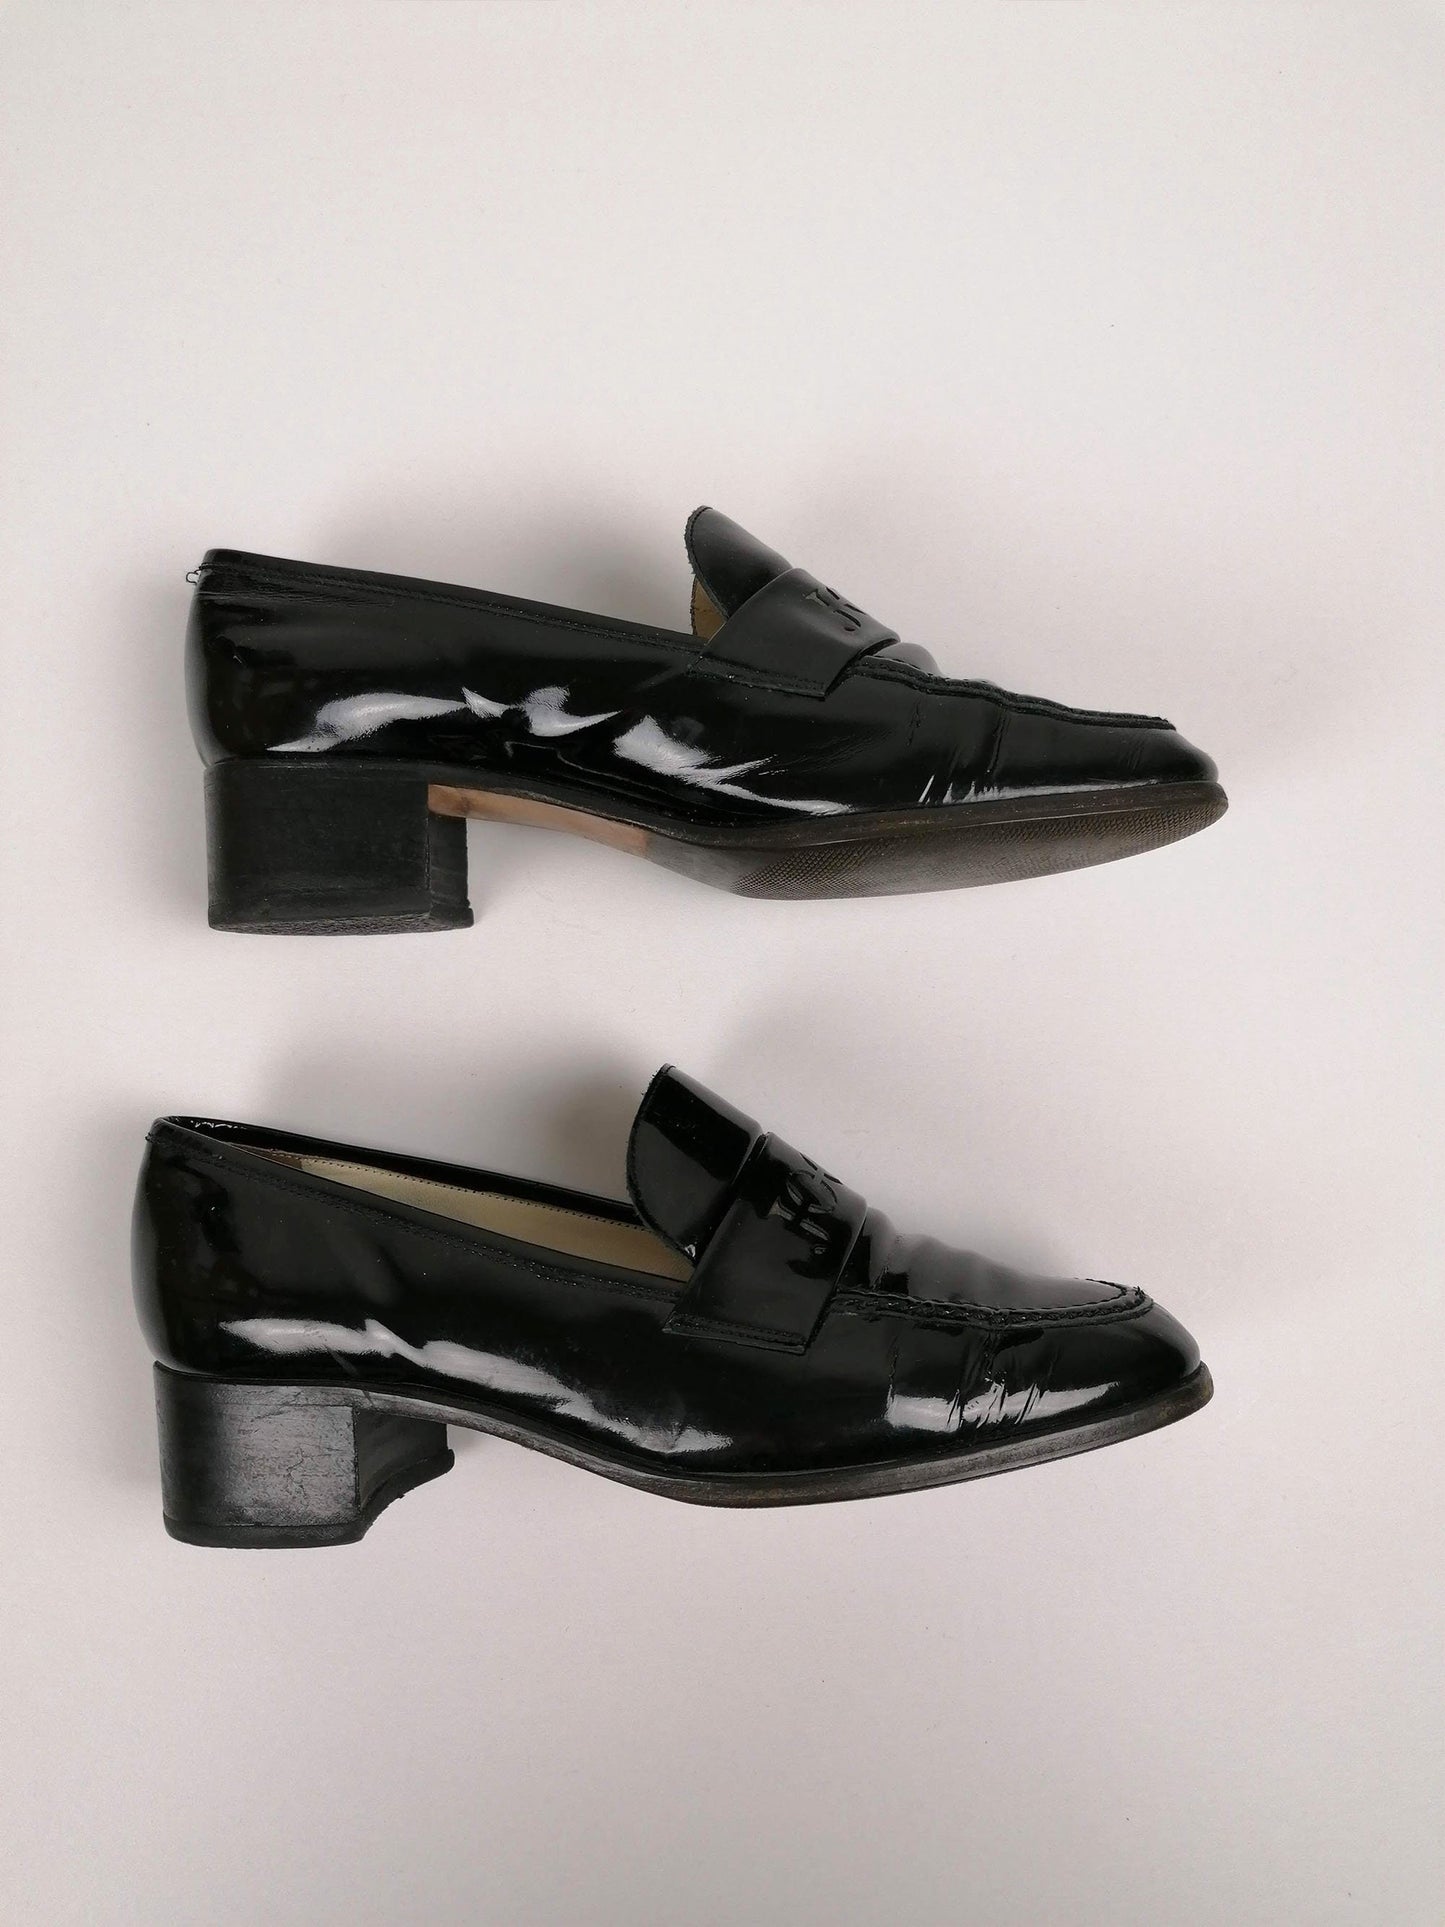 Vintage 90's JOOP! Patent Leather Loafers -  Size EU 38 / UK 5.5 / us 7.5